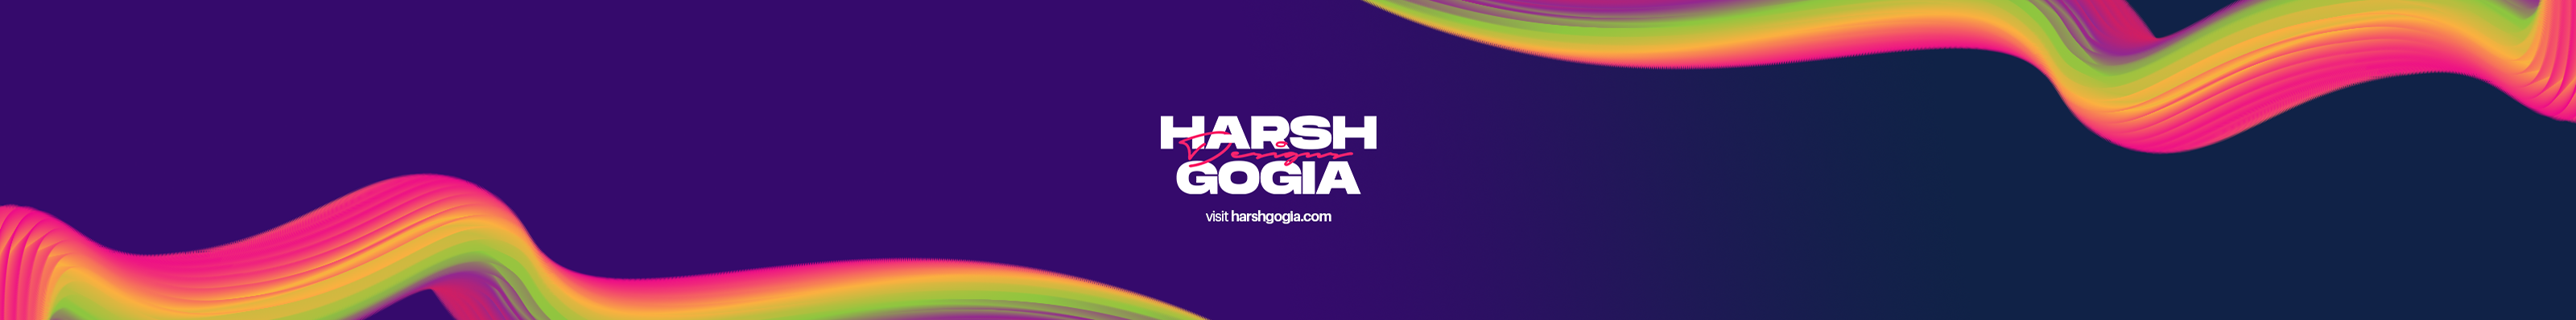 Harsh Gogia's profile banner